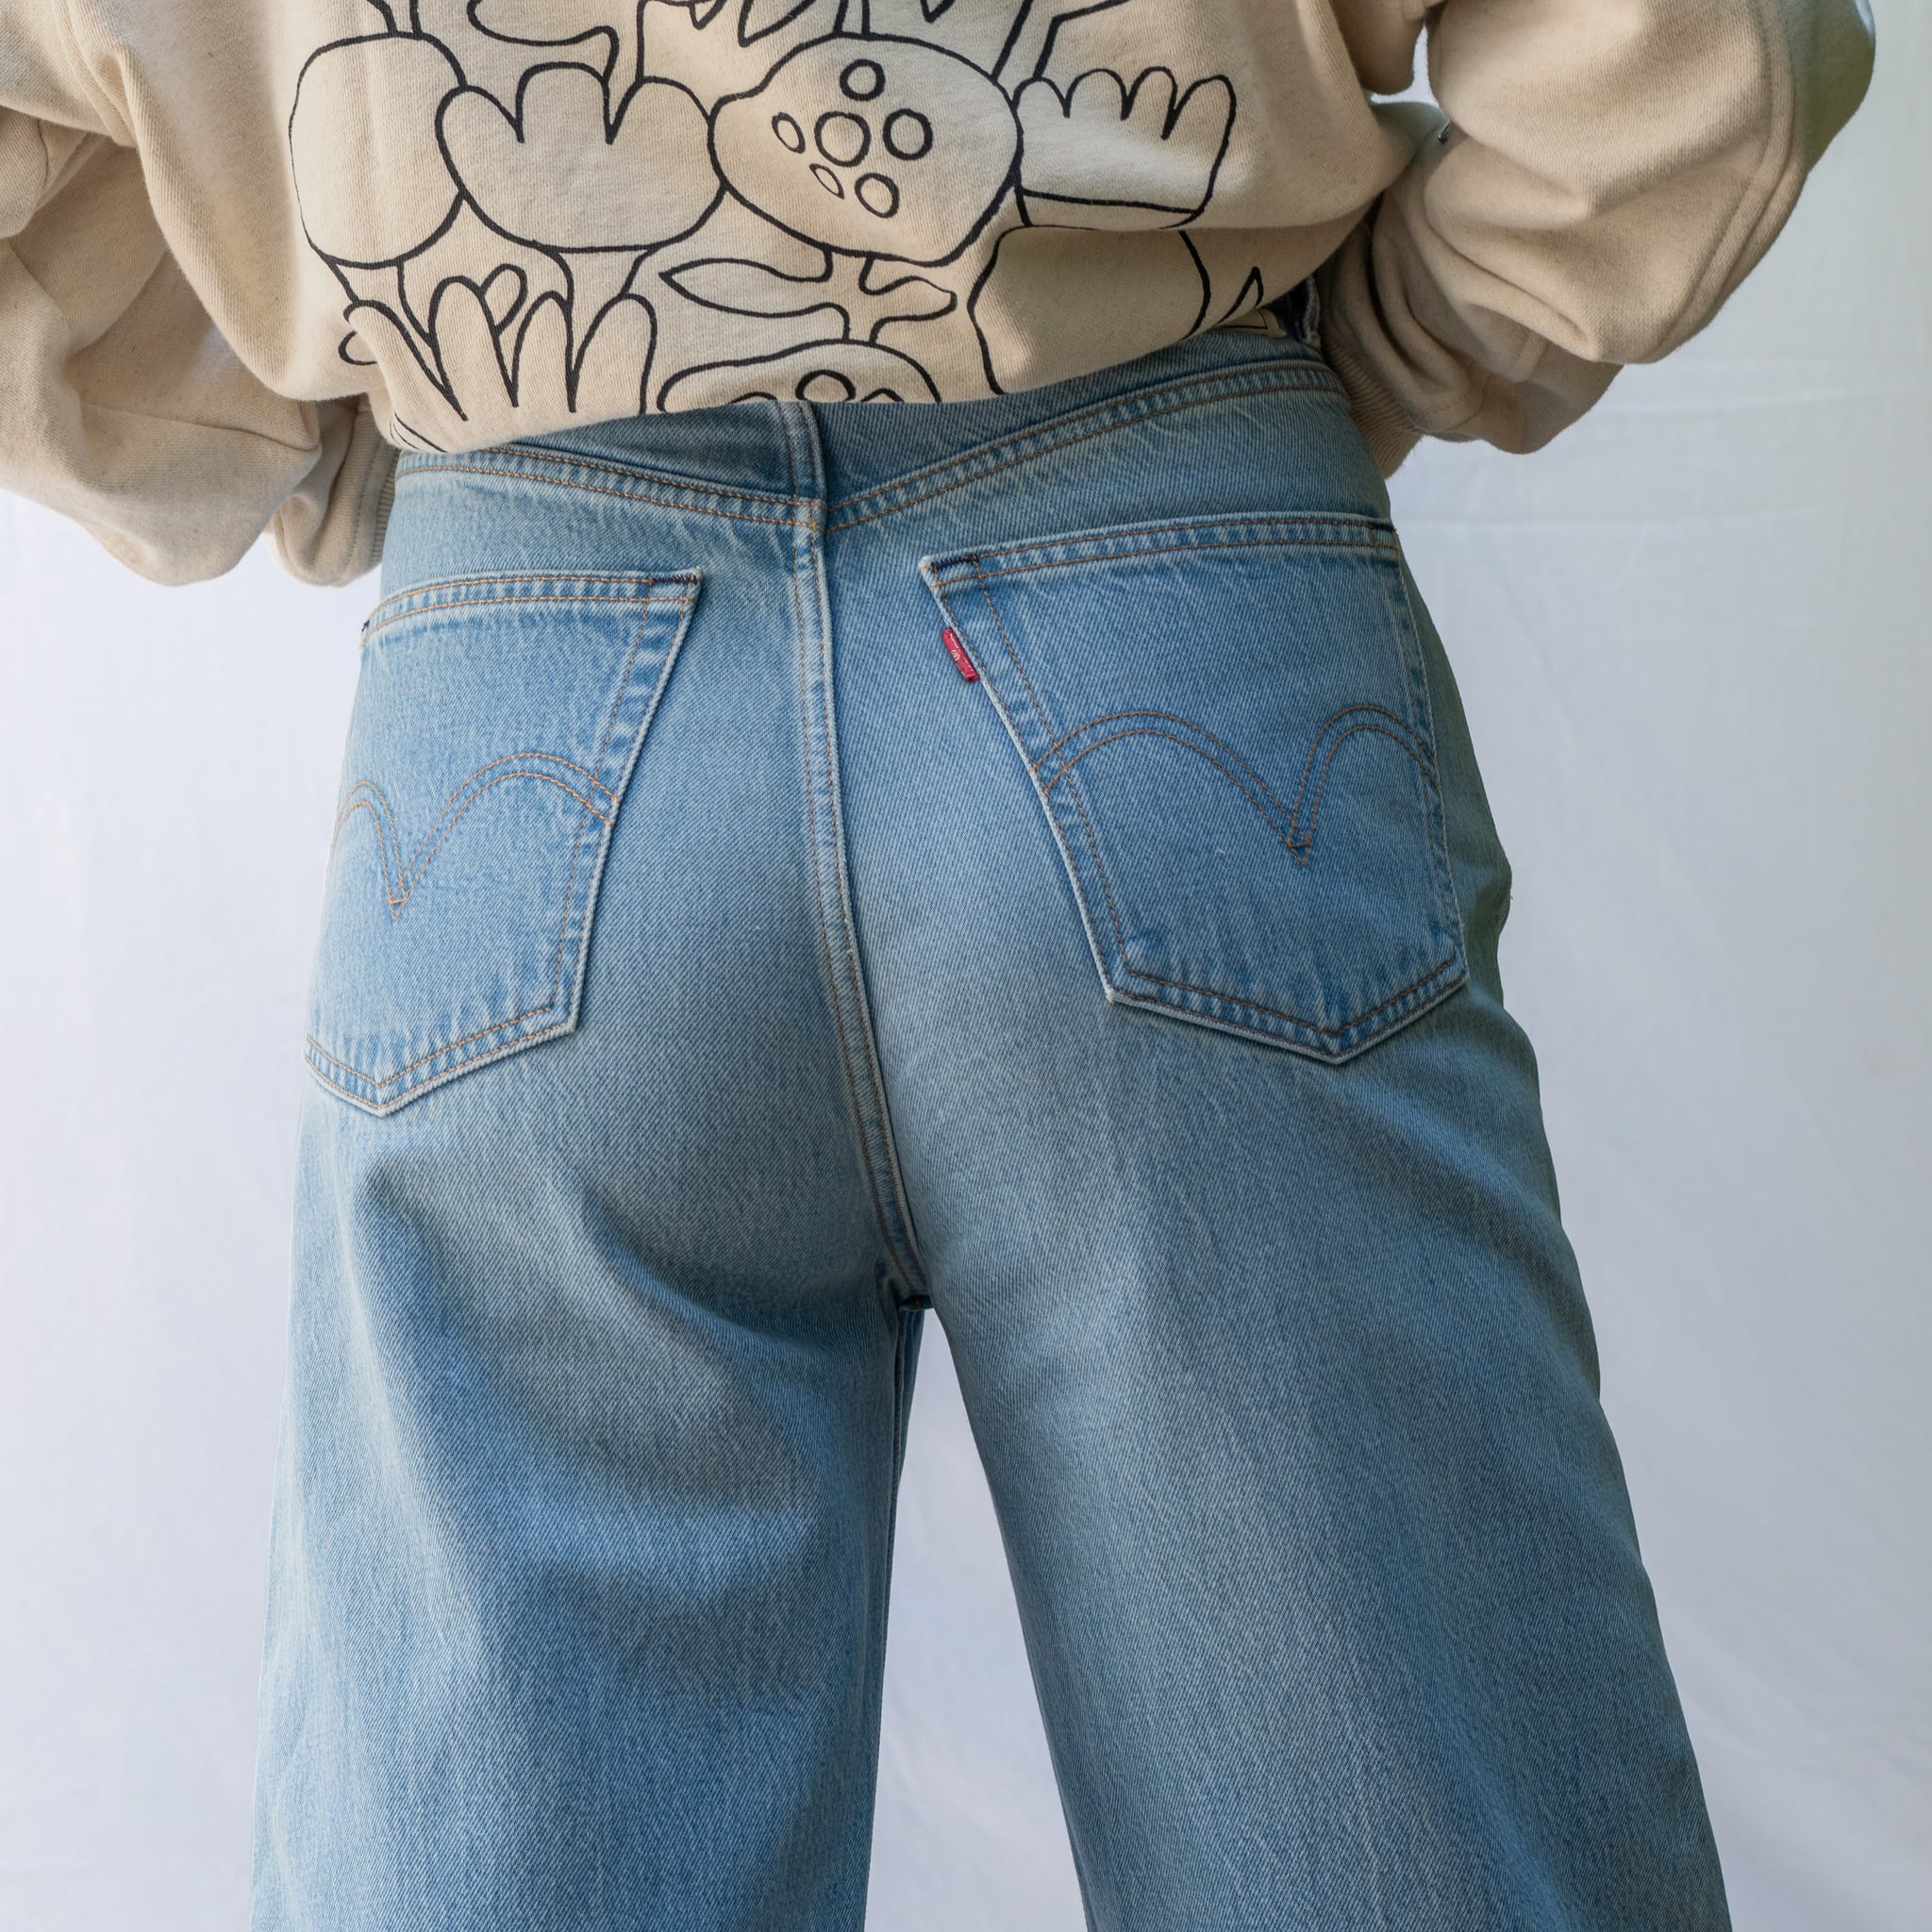 New Levi's Sustainable Jeans 2020 | POPSUGAR Fashion